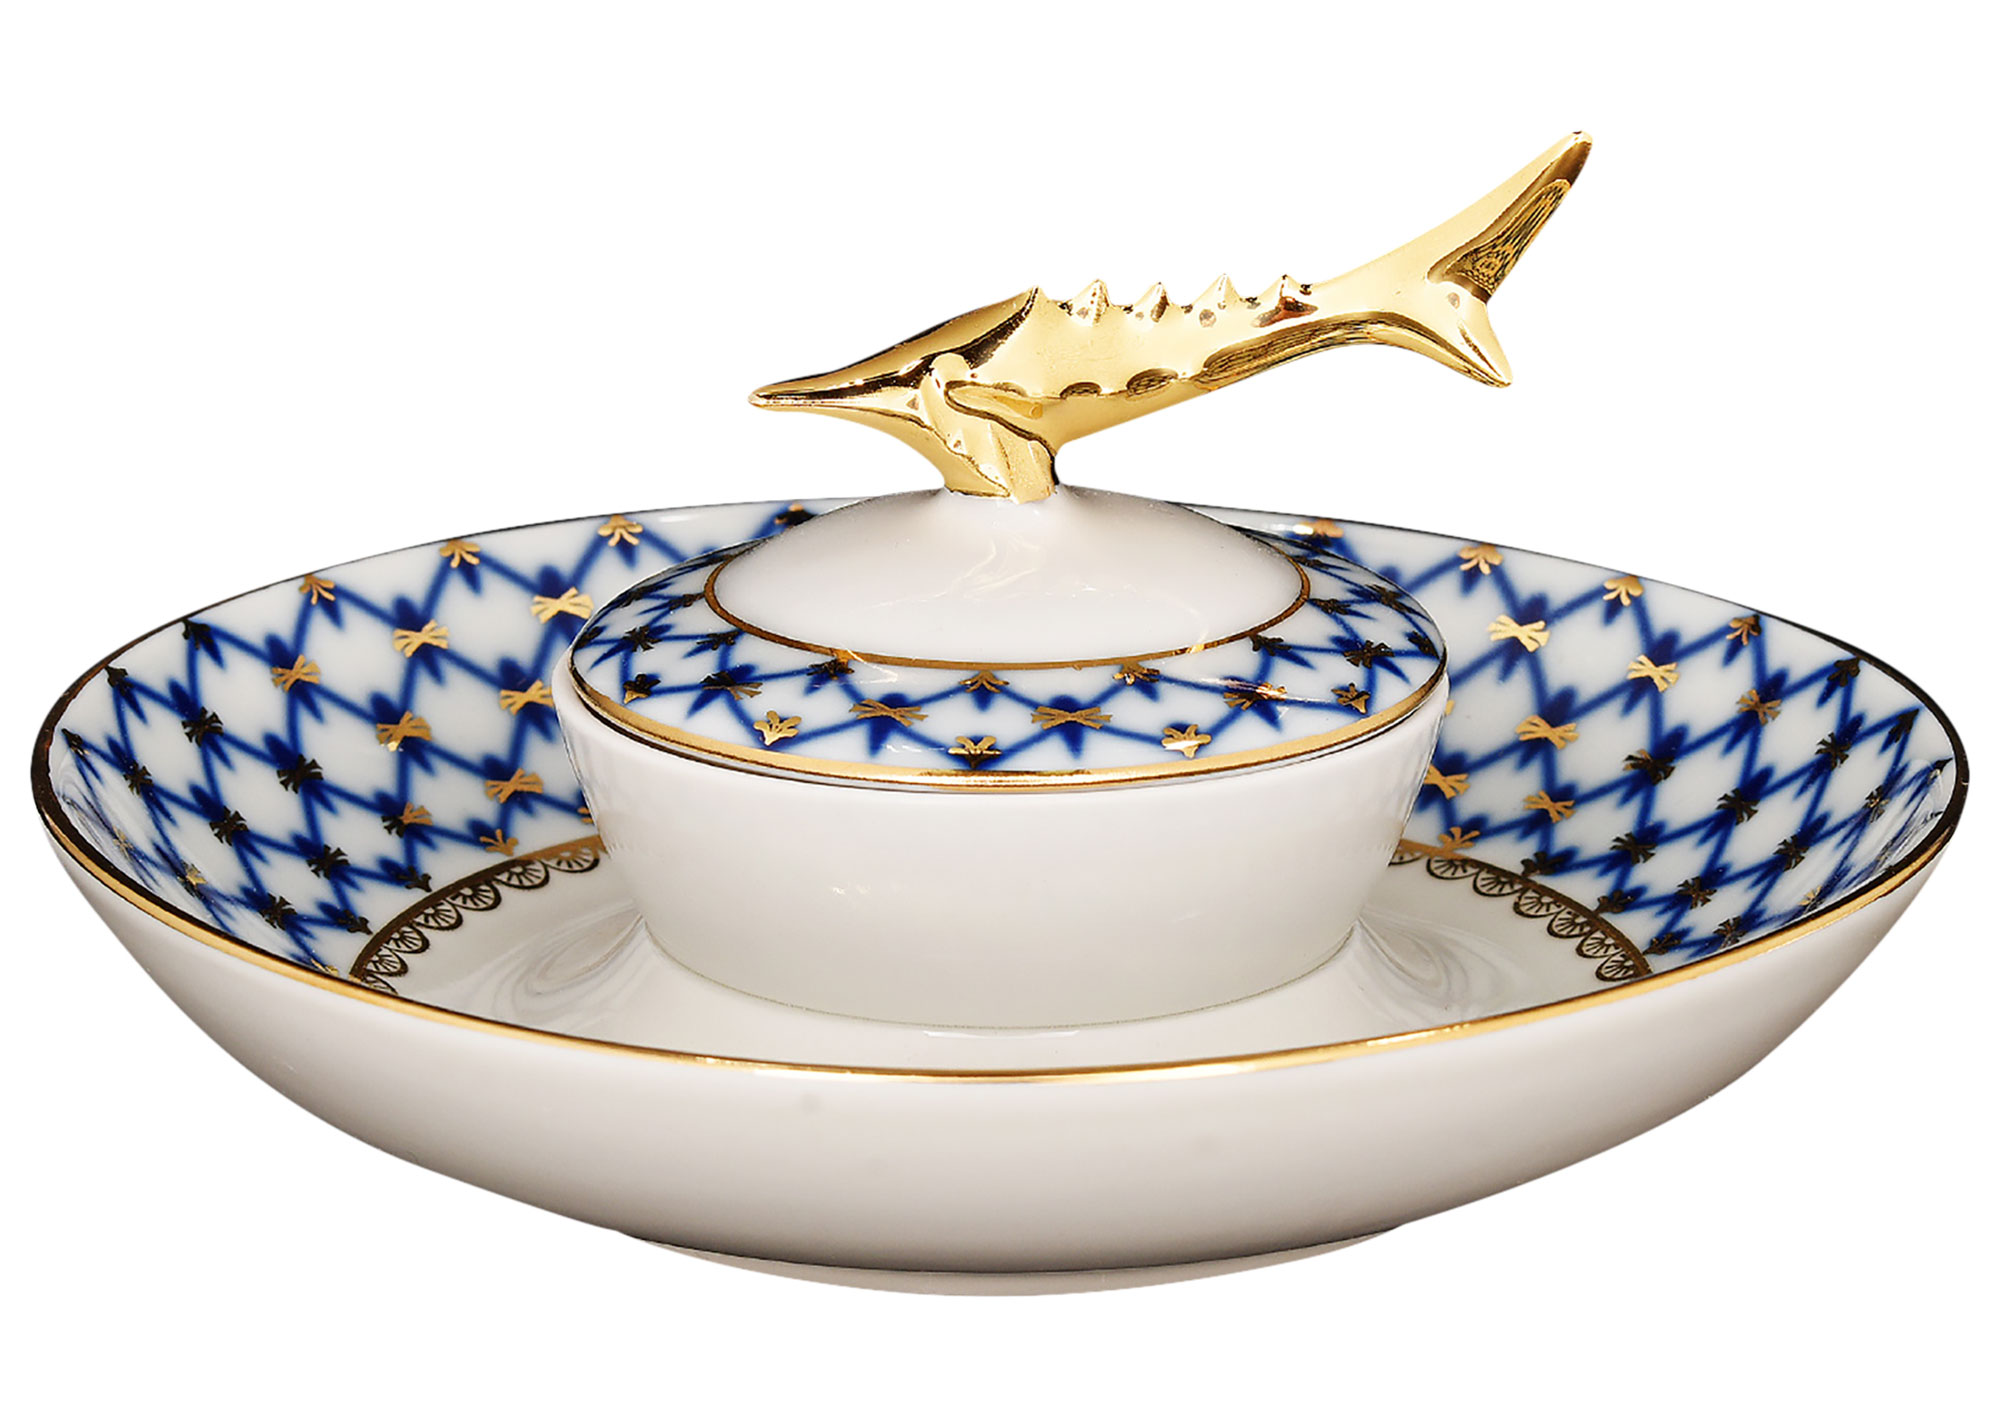 Buy Cobalt Net Caspian Caviar Dish at GoldenCockerel.com